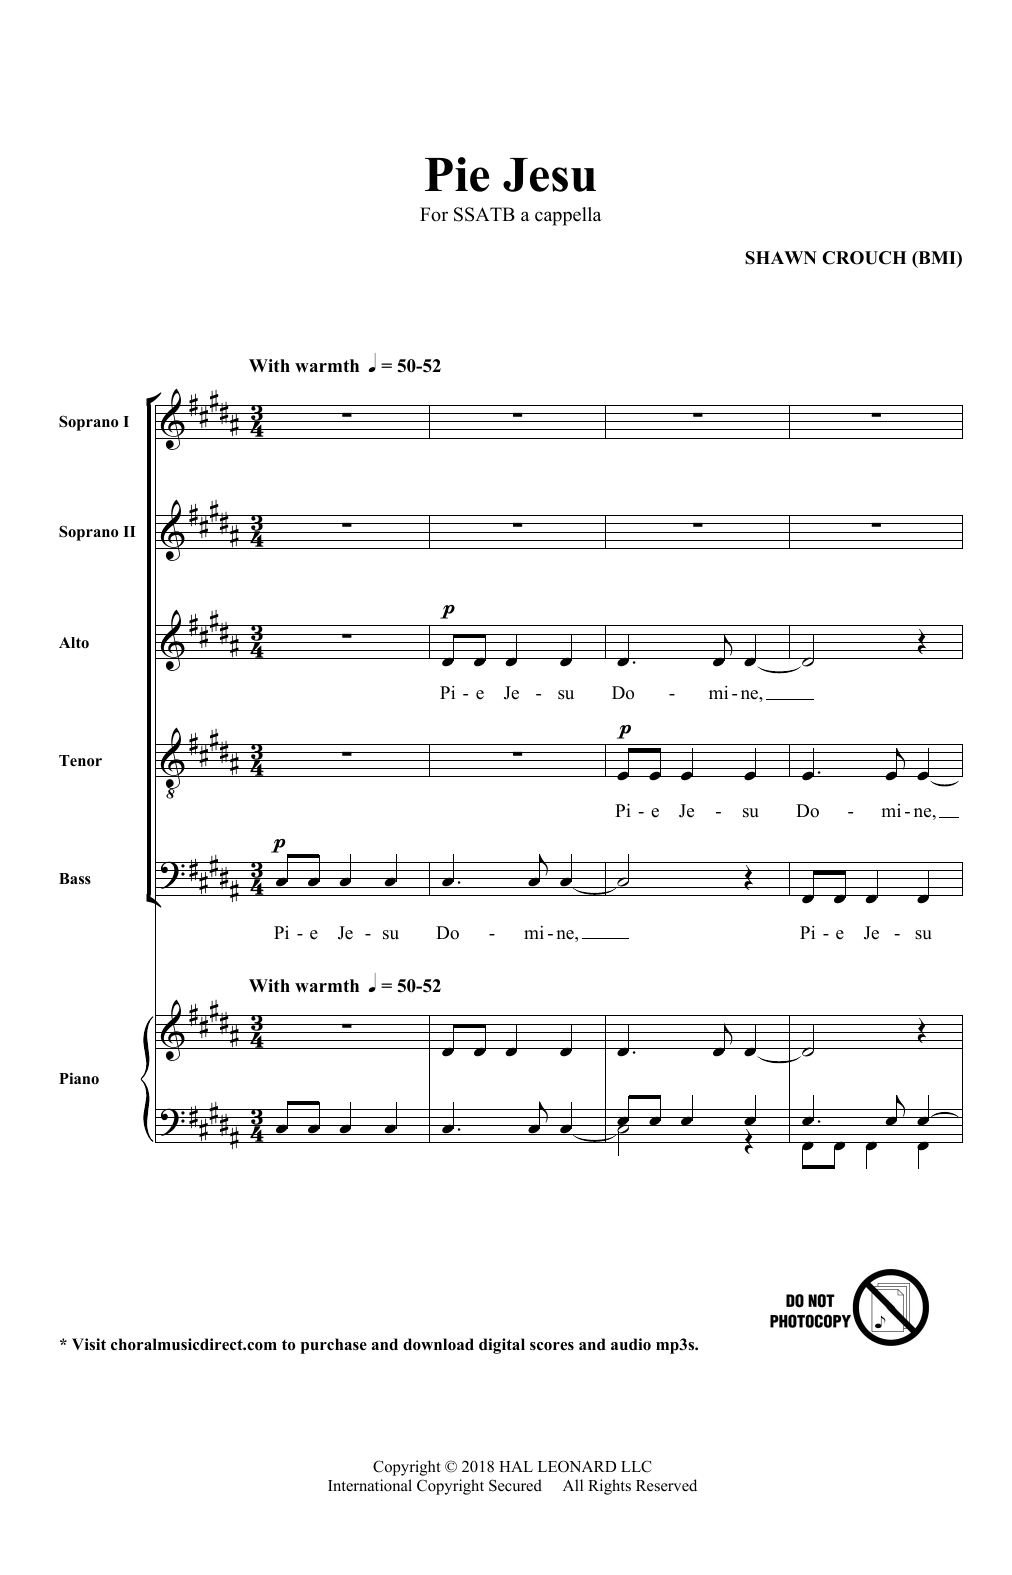 Shawn Crouch Pie Jesu Sheet Music Notes & Chords for SATB Choir - Download or Print PDF